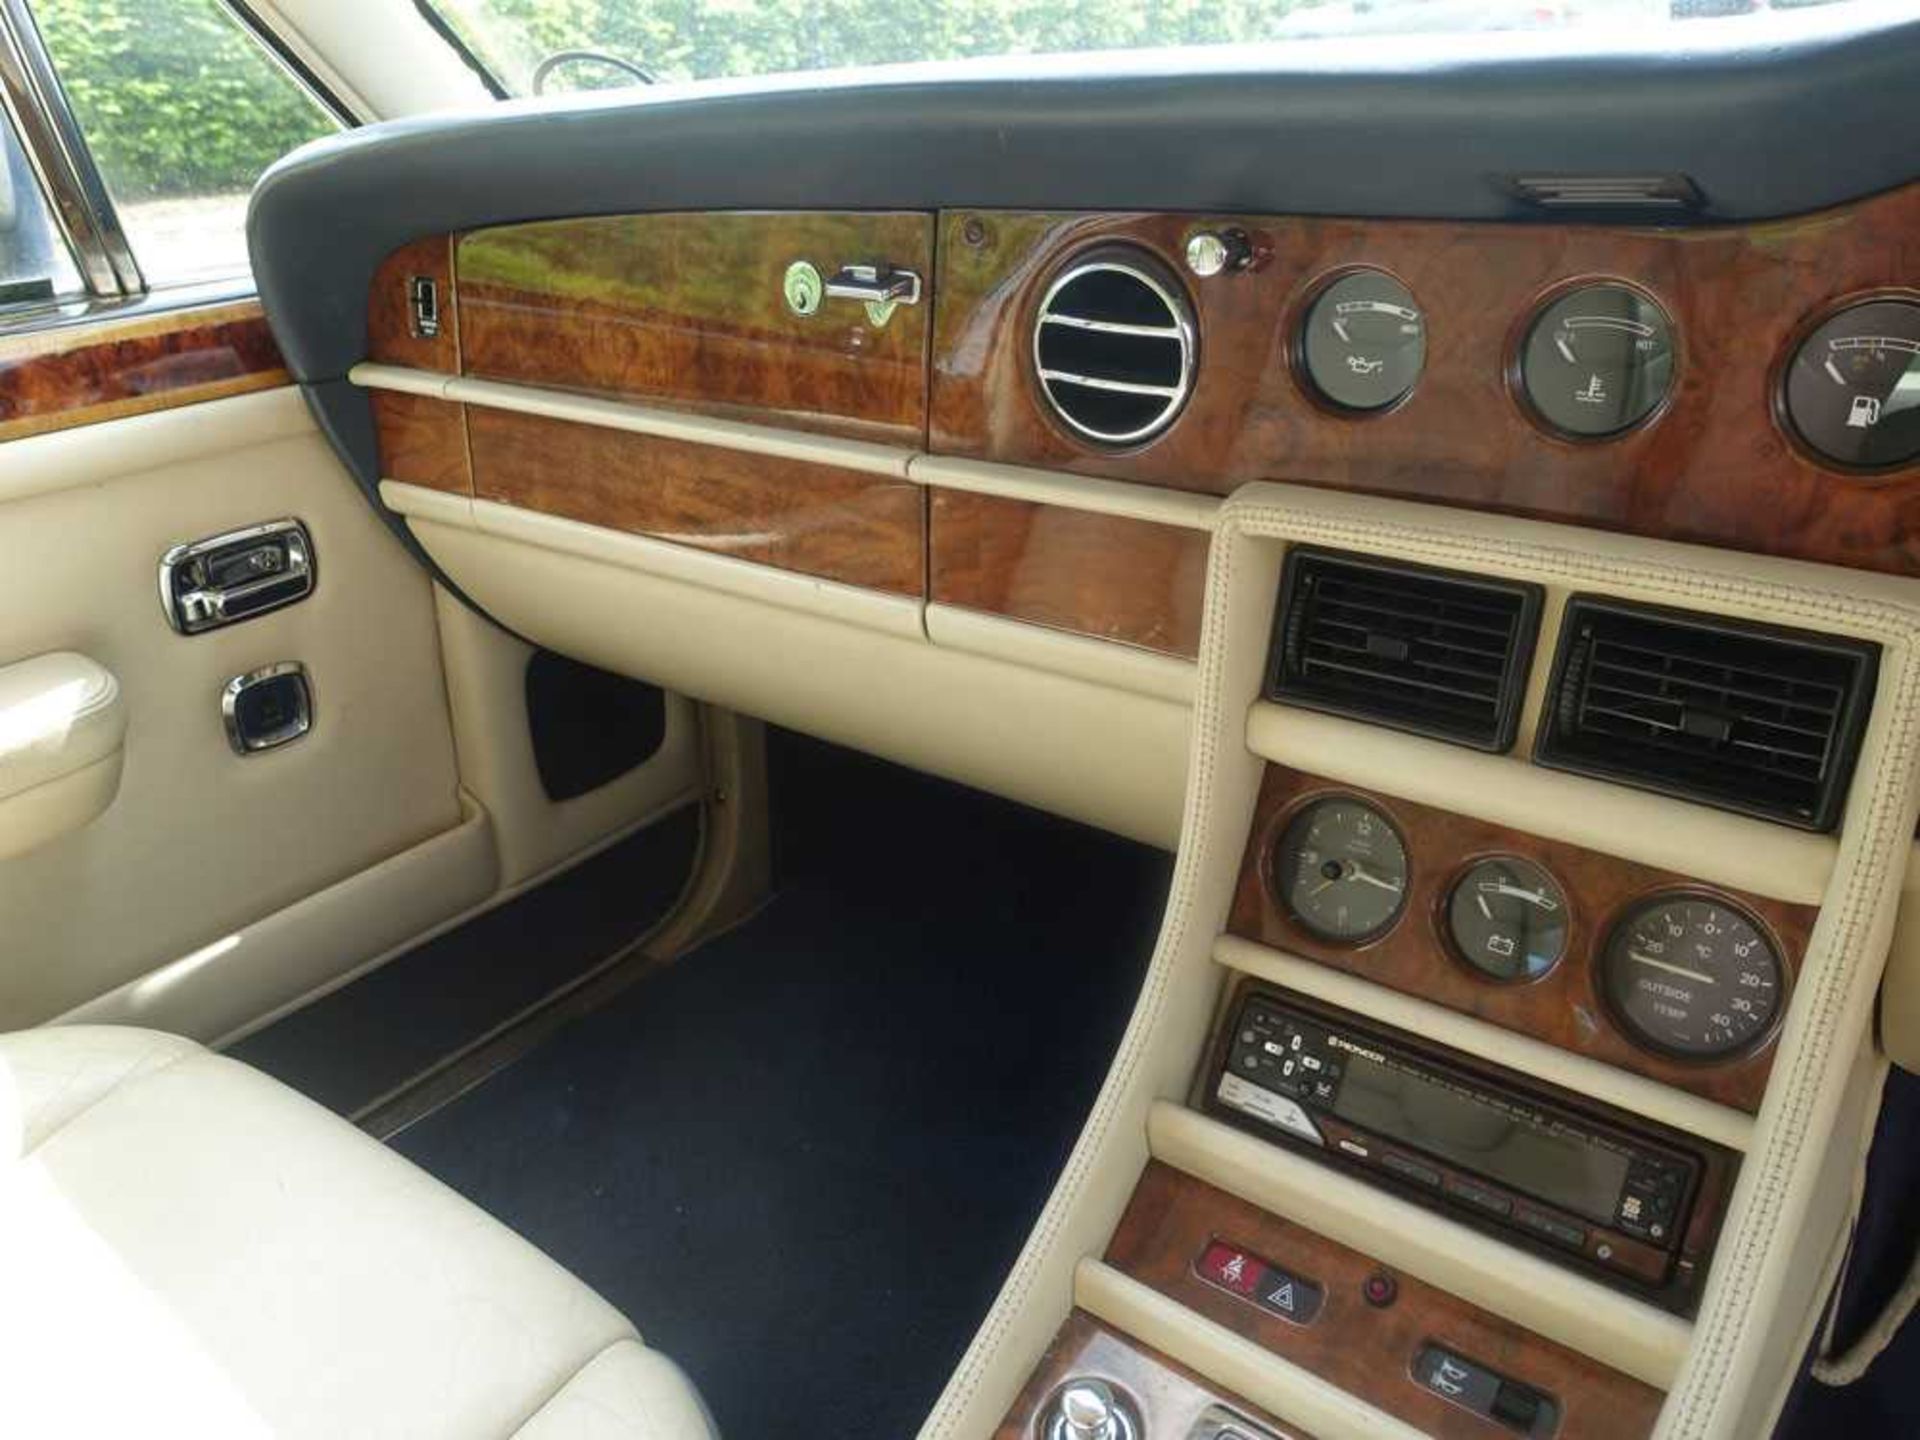 1989 (F registration) Bentley Turbo R 6750cc V8 automatic 4 door saloon in blue, registration F429 - Image 15 of 20